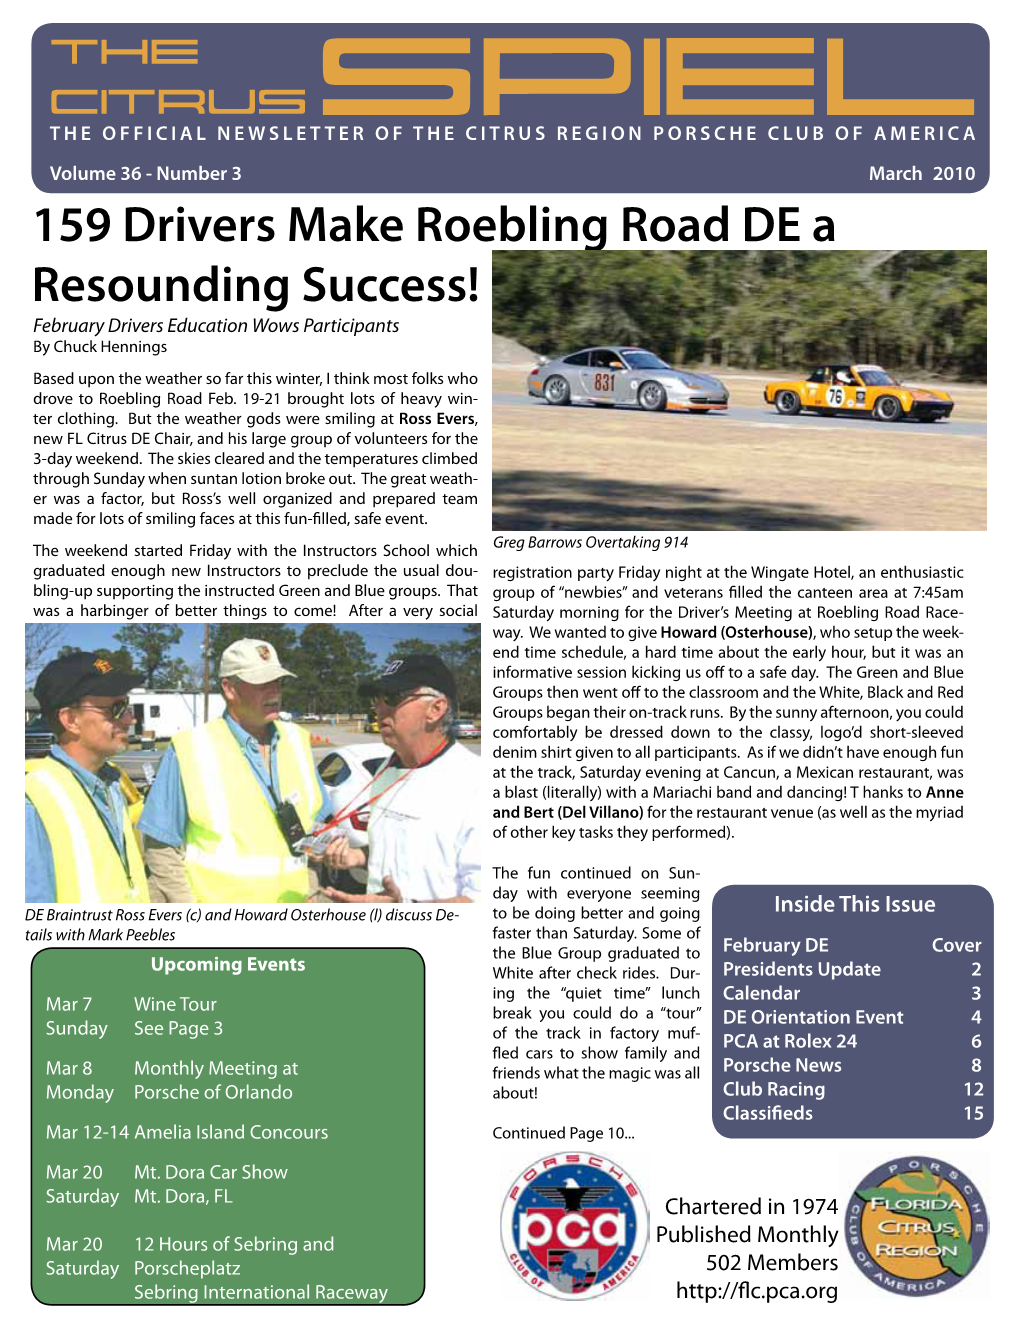 159 Drivers Make Roebling Road DE a Resounding Success!